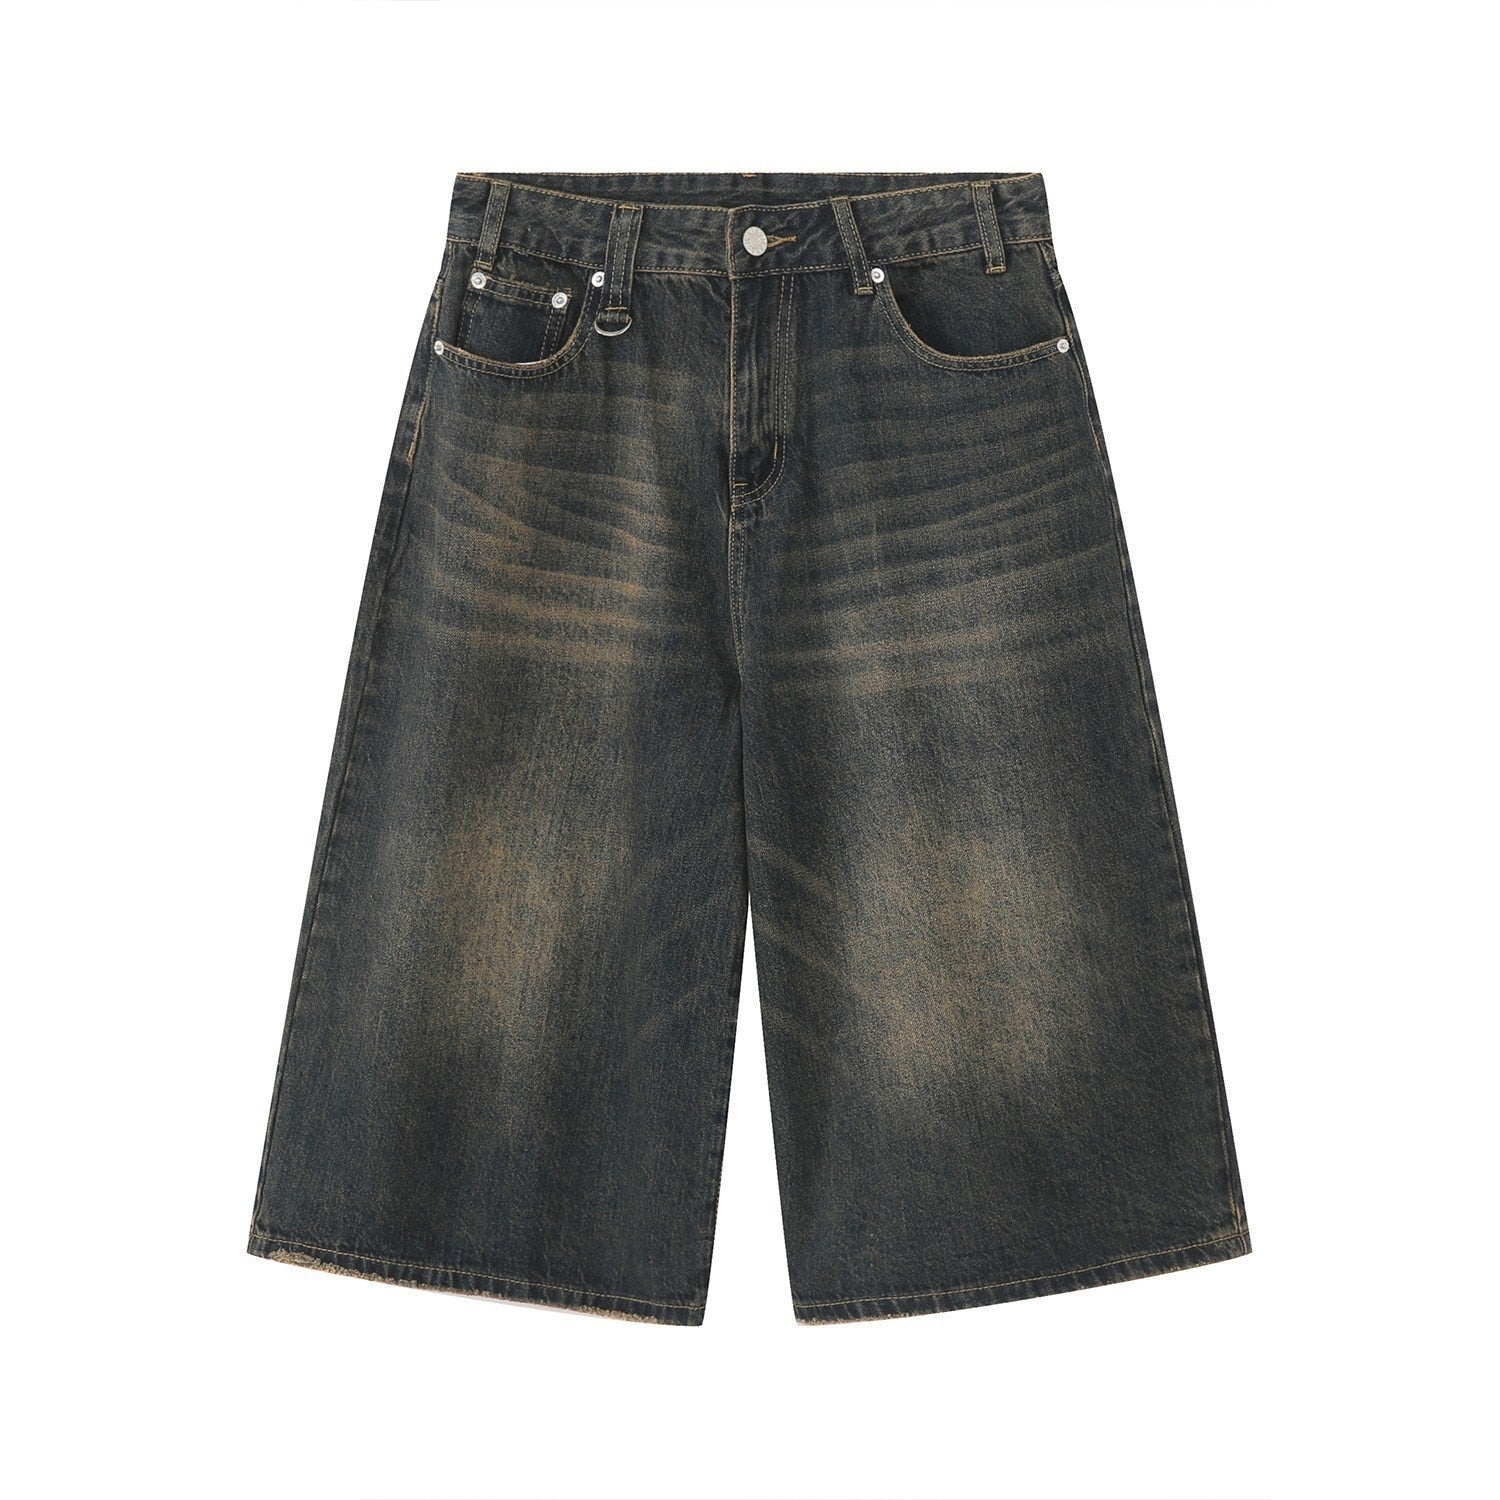 Firmranch 2023 Blue Baggy Jorts For Men Women Oversized Mid-length Shorts Jeans Ninth Denim Pants Streetwear Free Shipping